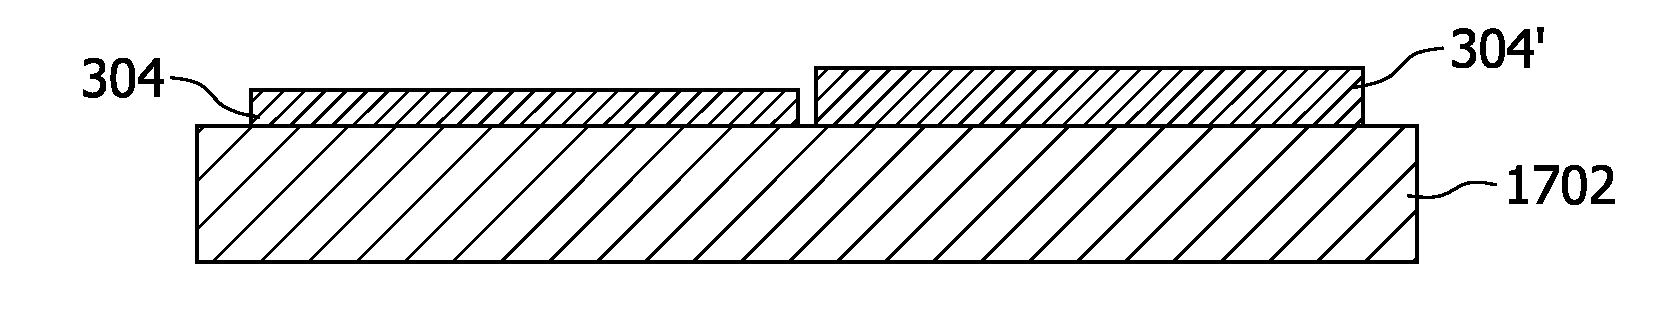 Assembly method for a tiled radiation detector